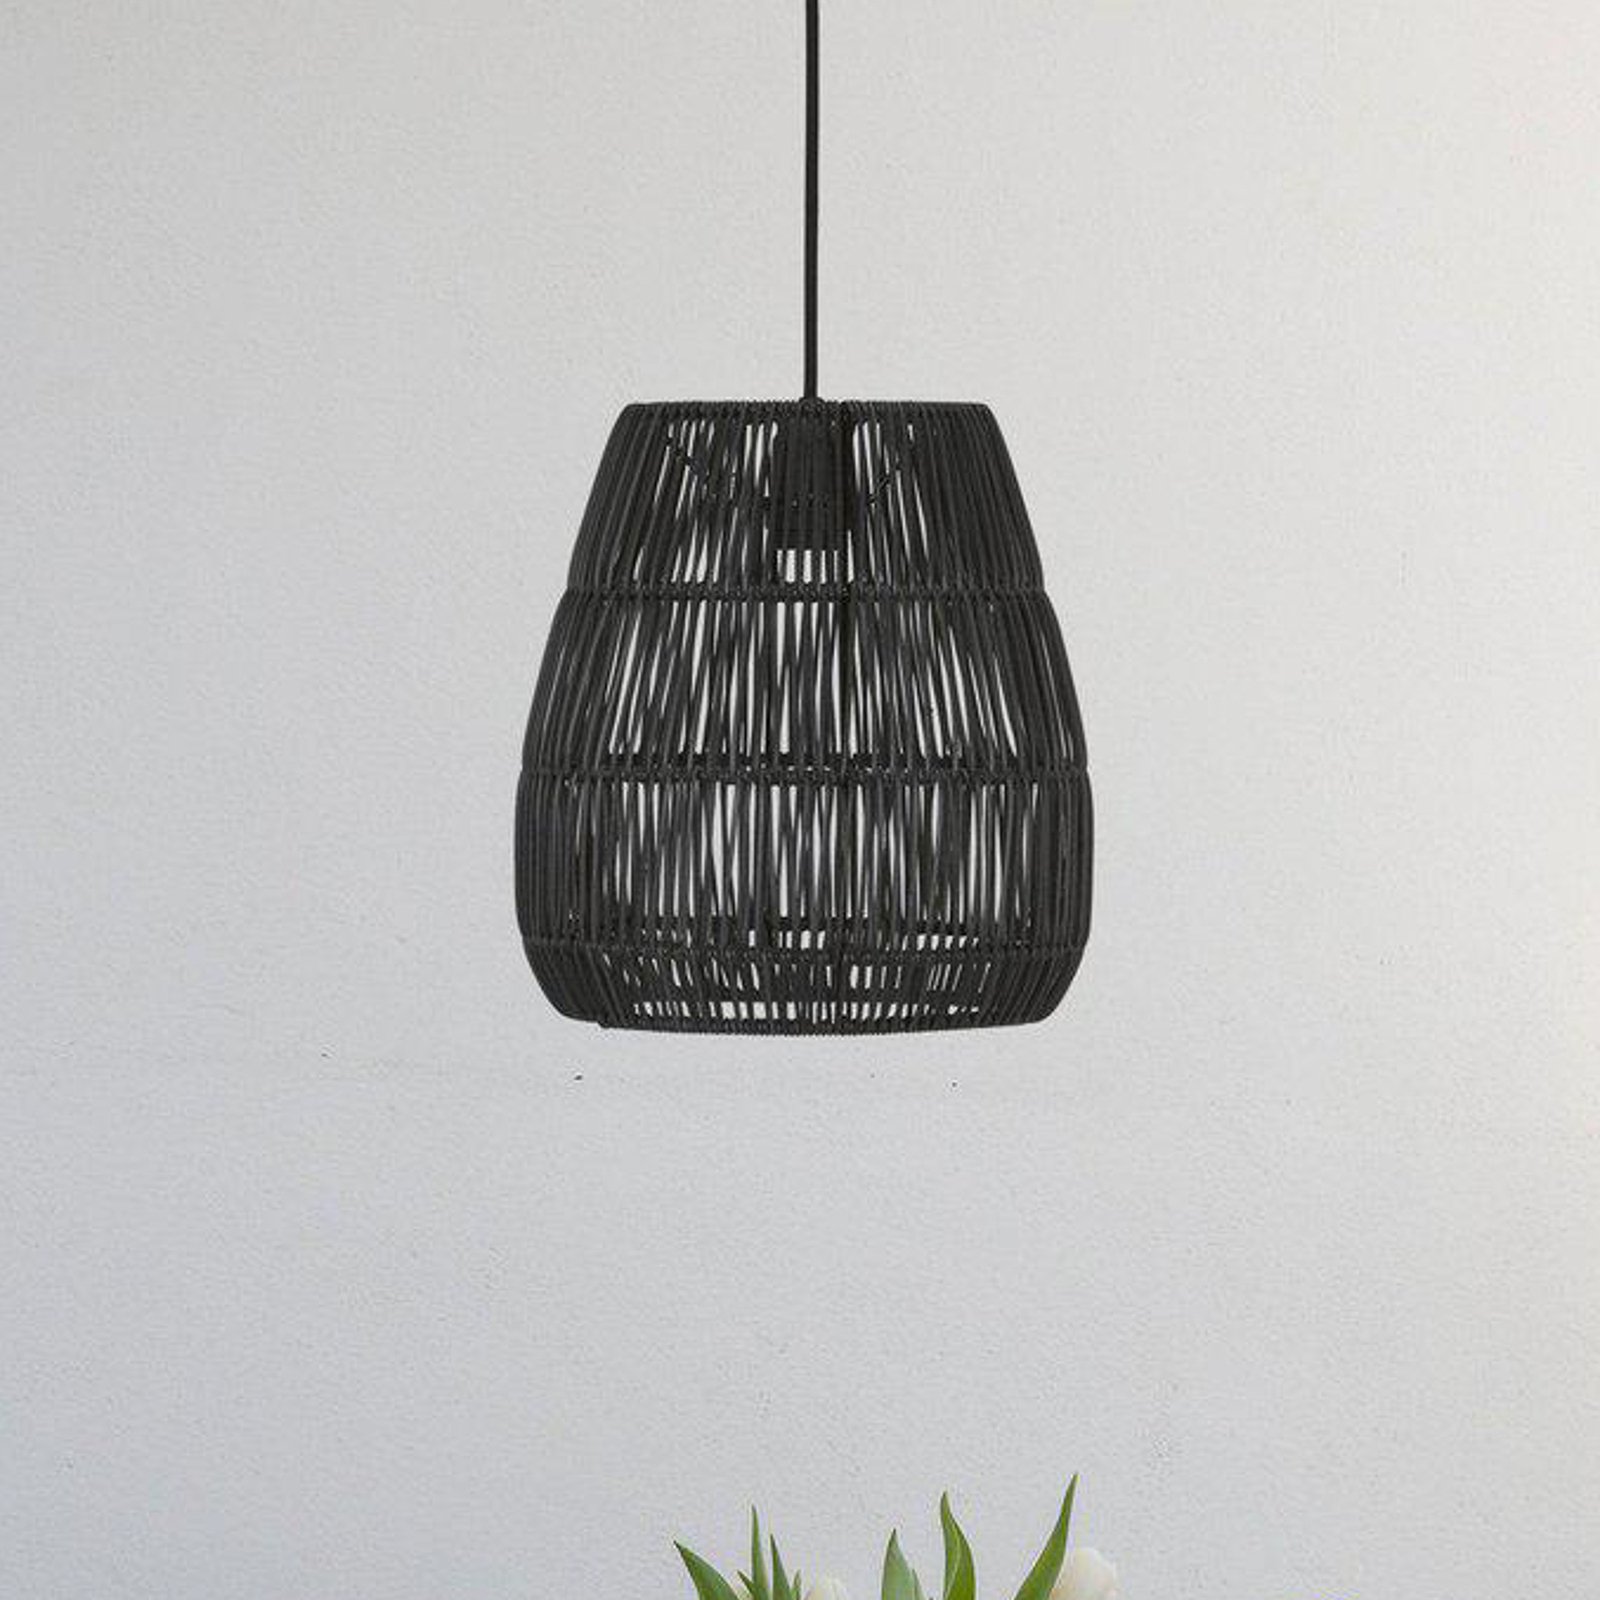 PR Home outdoor hanging light Saigon, black, Ø 28 cm, UK